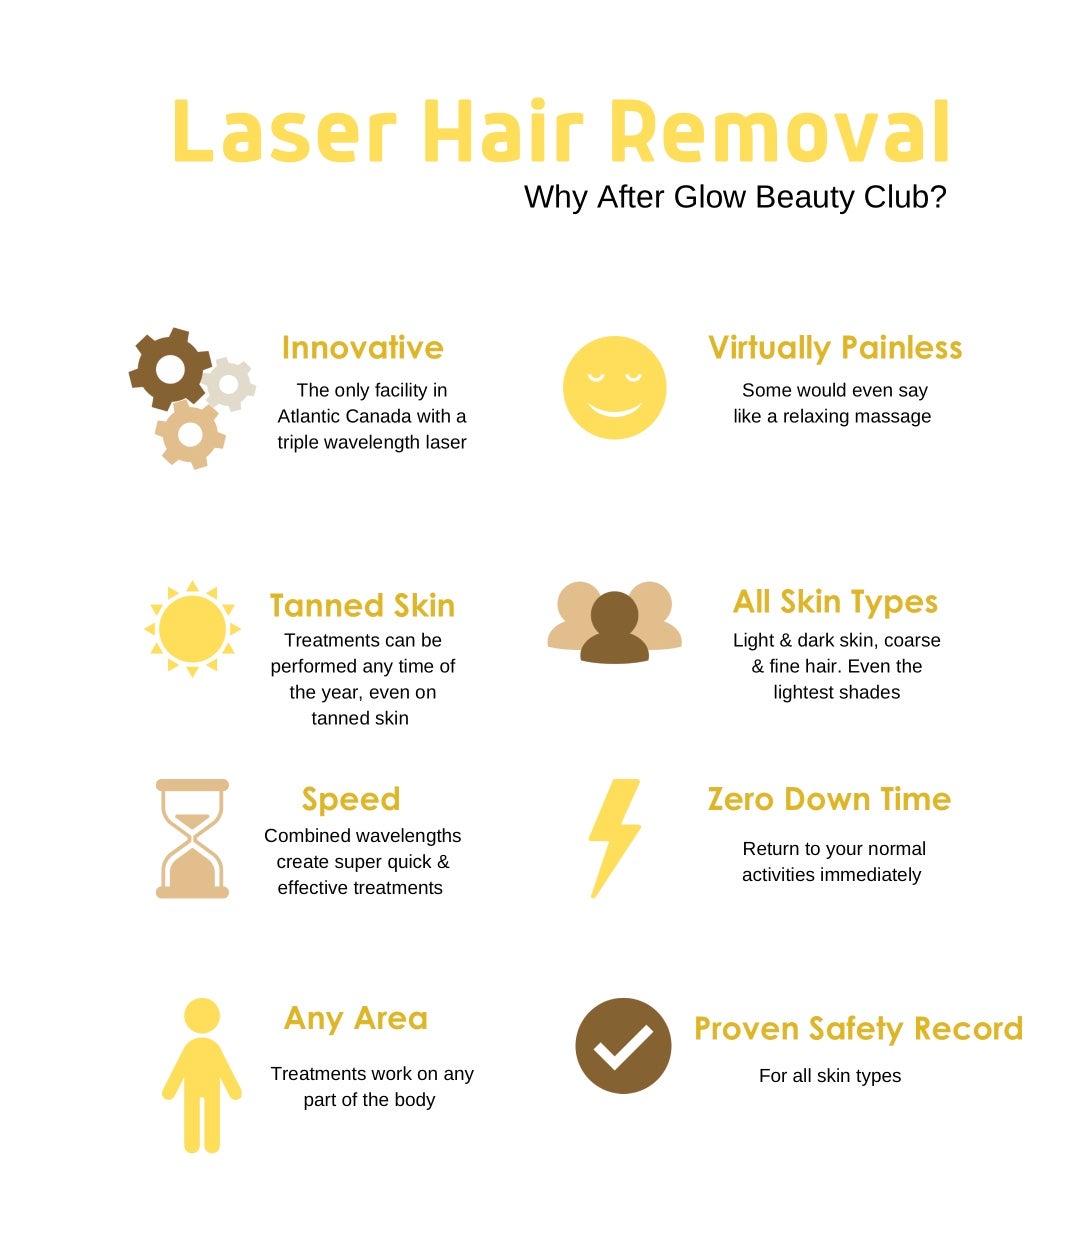 Laser Facial Hair Removal - Photos, Benefits, & FAQs